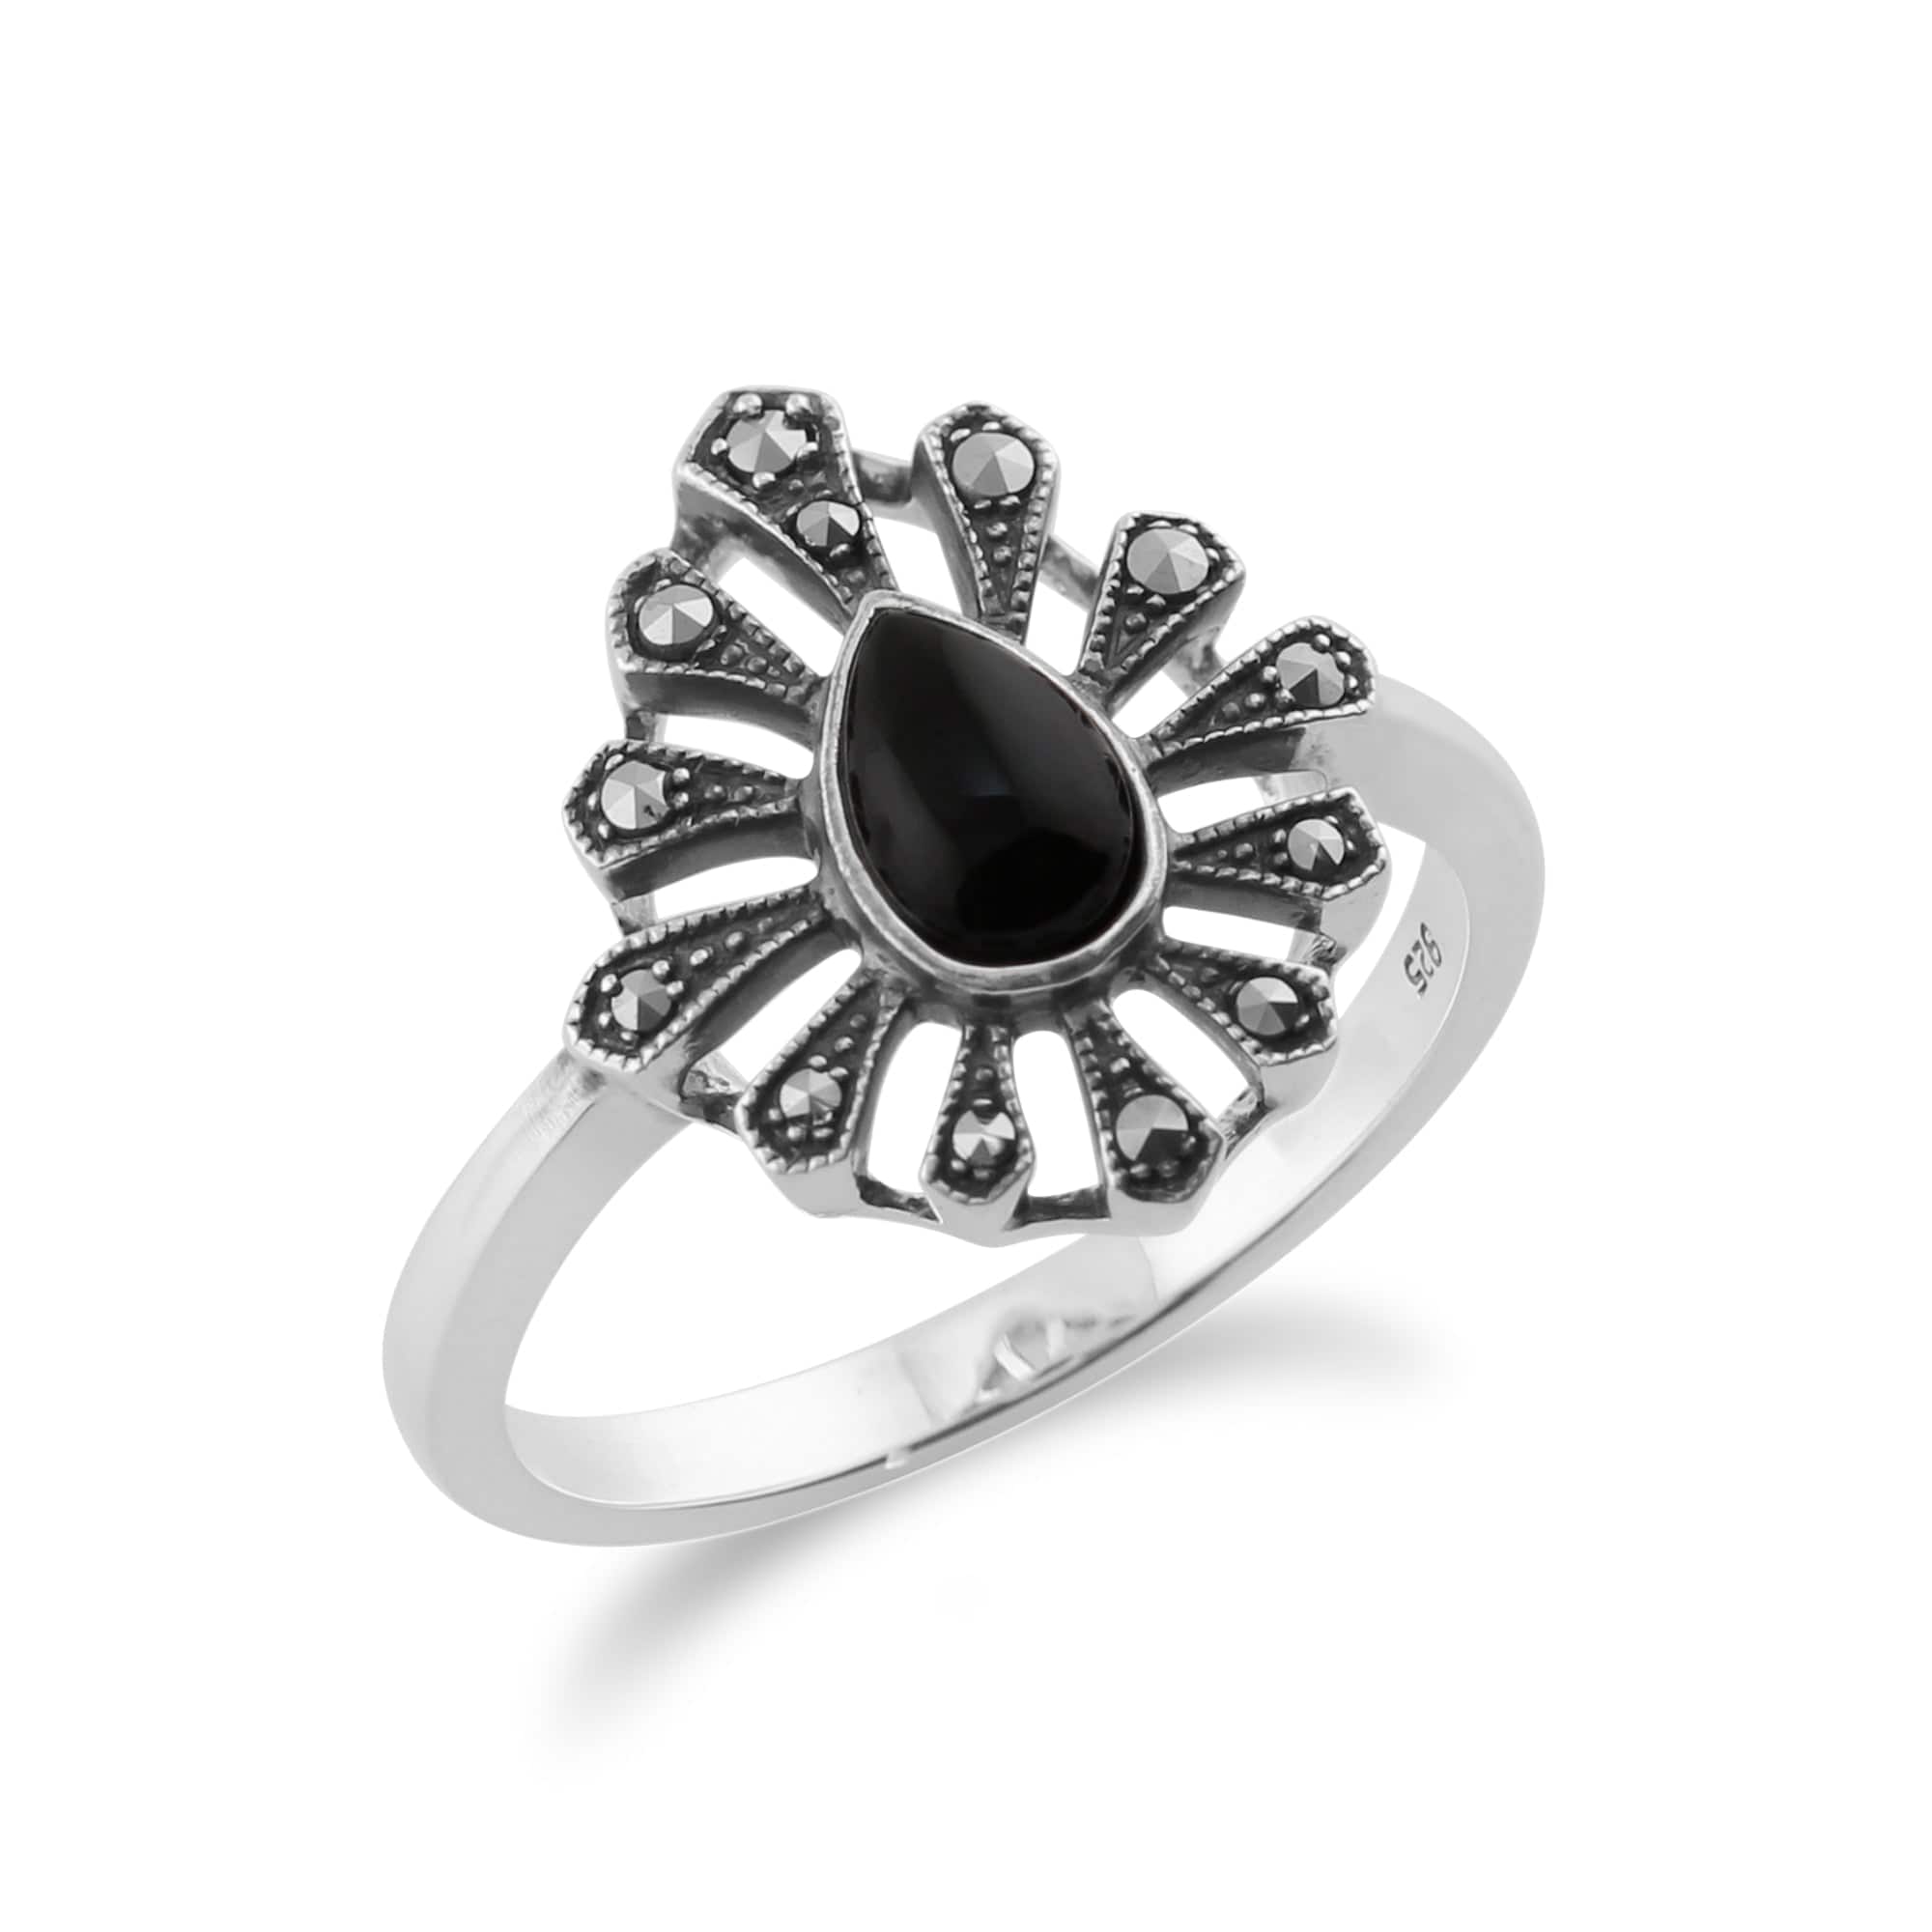 Gemondo 925 Sterling Silver 0.30ct Black Onyx & Marcasite Art Deco Ring Image 2